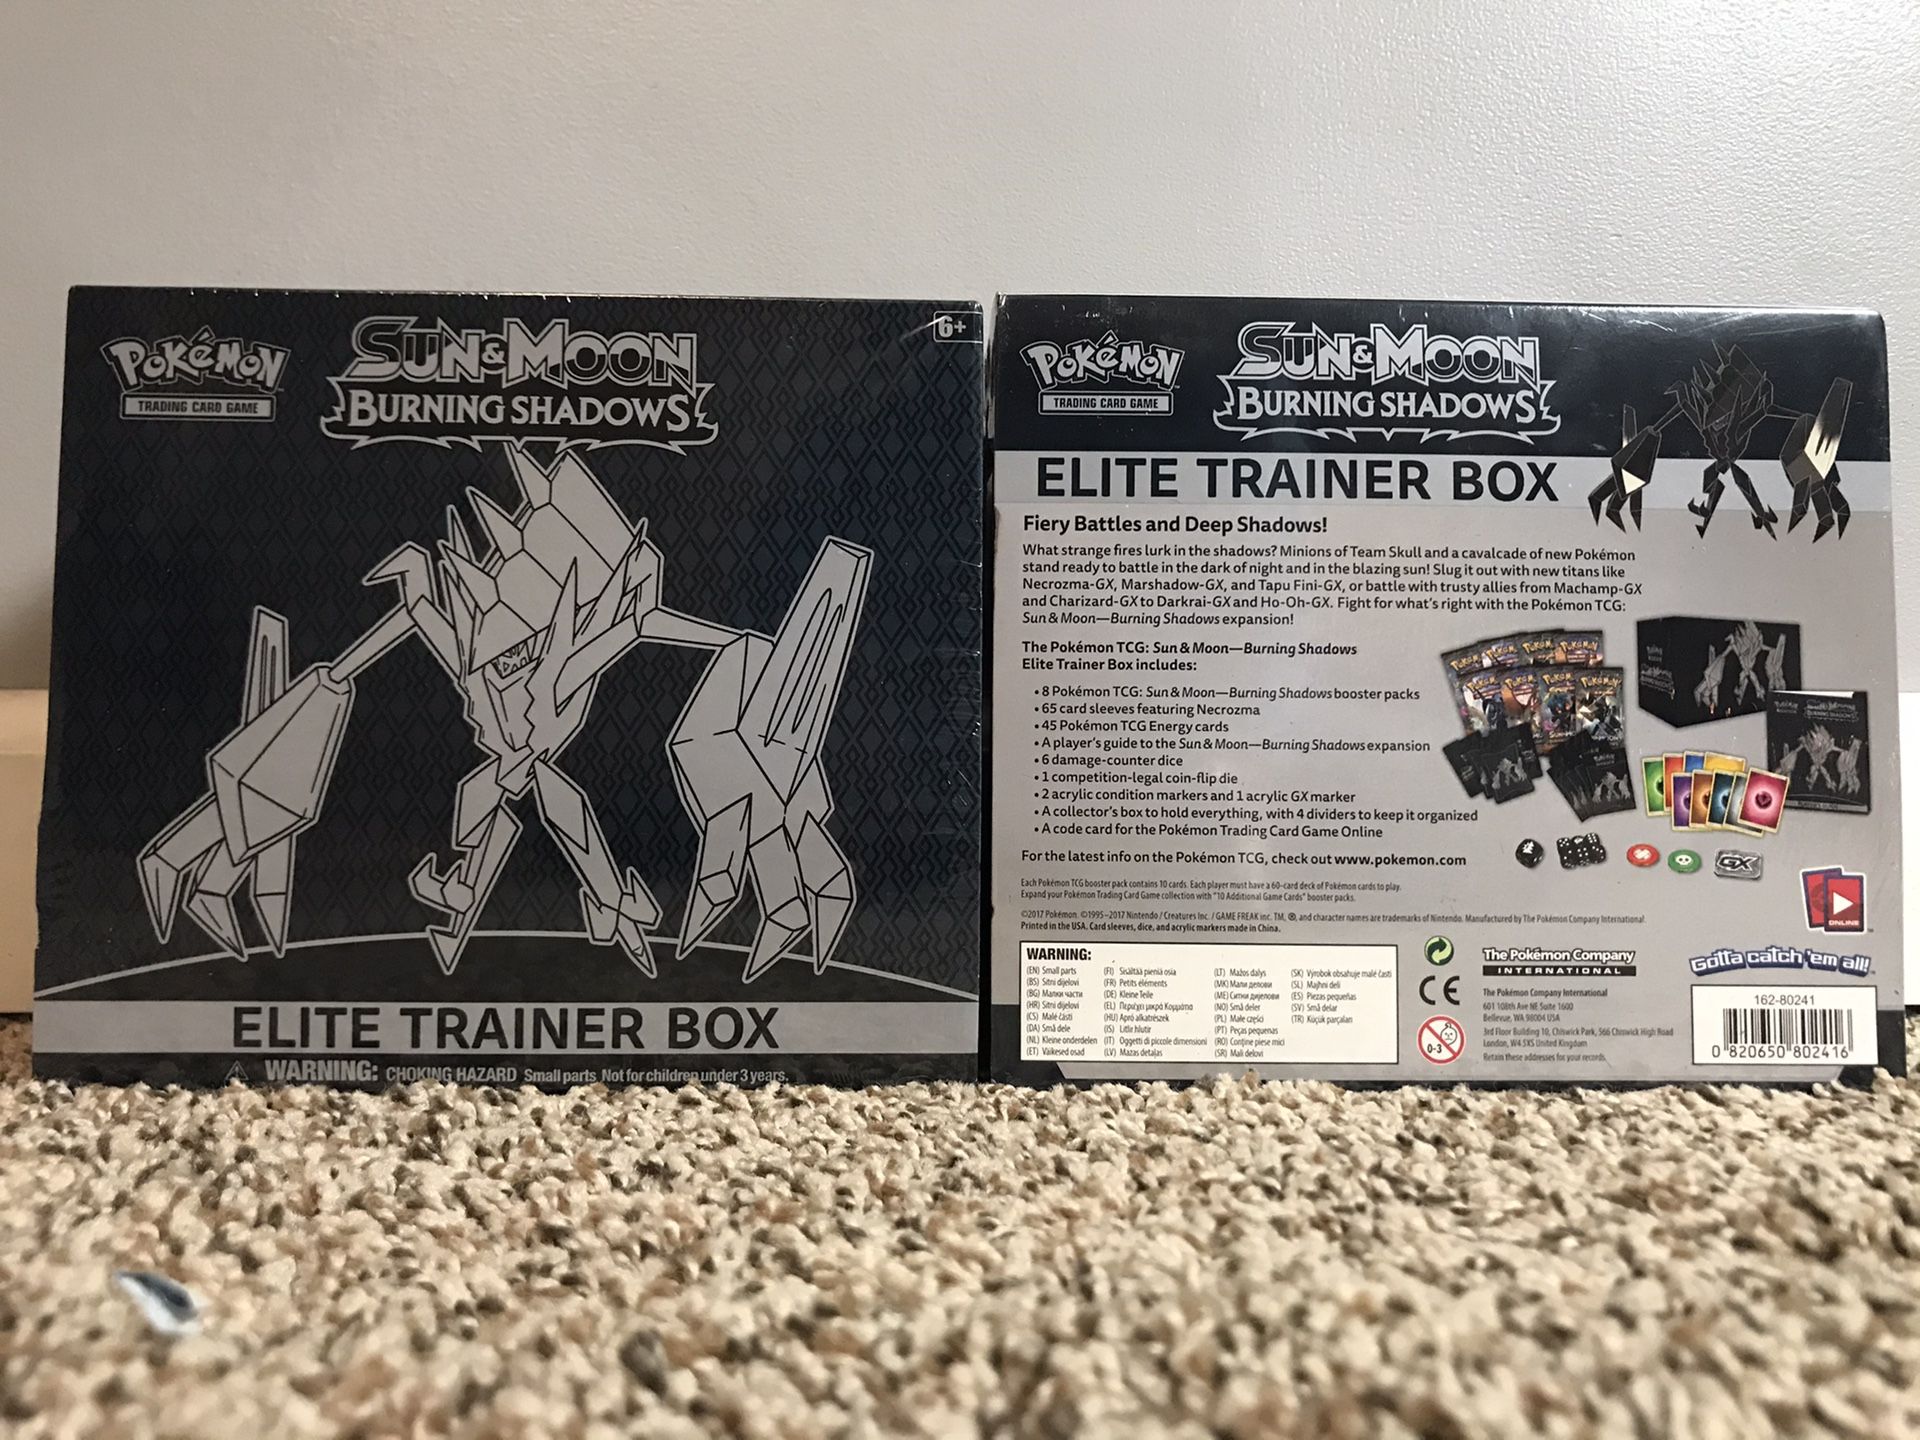 Pokèmon Sun&Moon “Burning Shadows” Elite Trainer Box Pack of 2